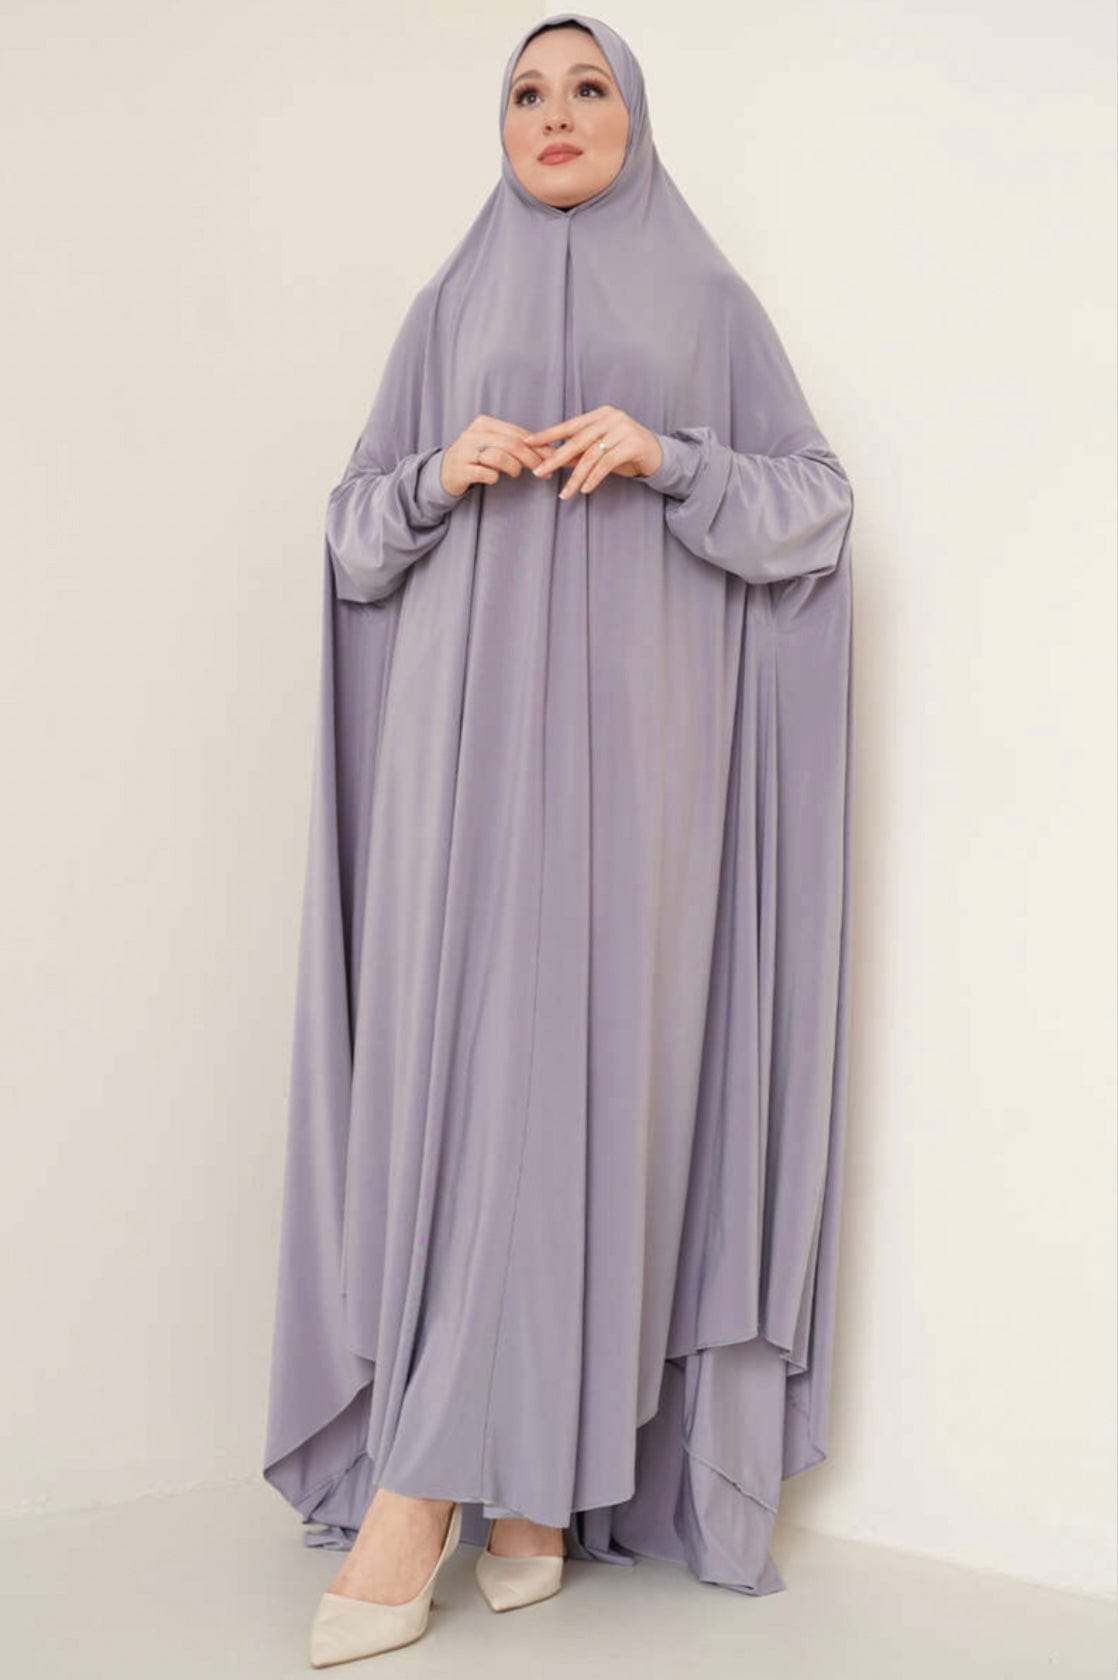 Deen Souvenir Abaya Premium Jersey in Grau Abaya Premium Jersey in Grau - Modebewusstsein auf höchstem Niveau